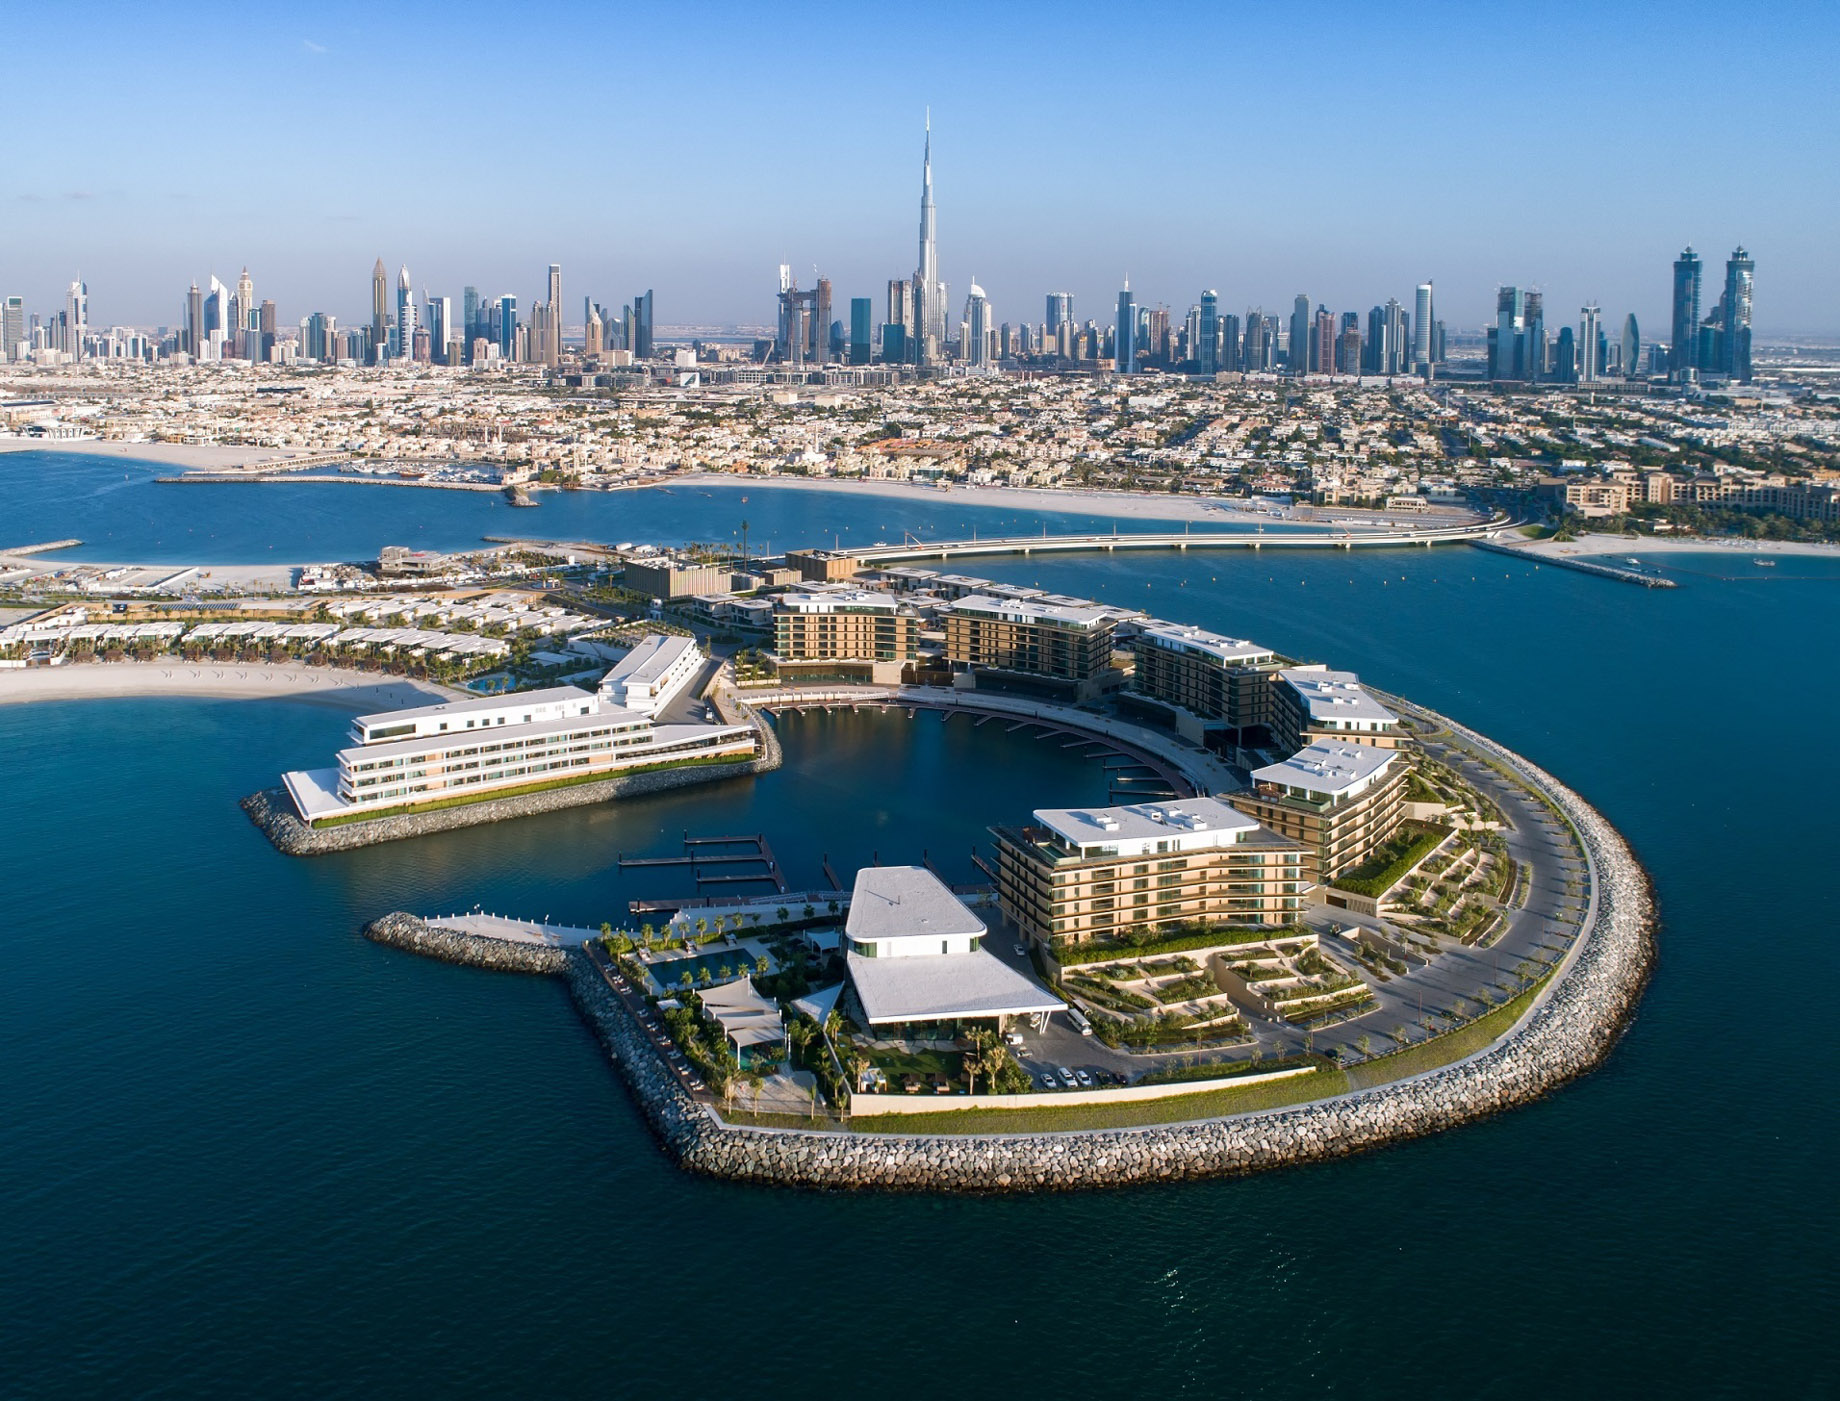 Bvlgari Luxury Resort Dubai – Jumeira Bay Island, Dubai, UAE – Resort Aerial View